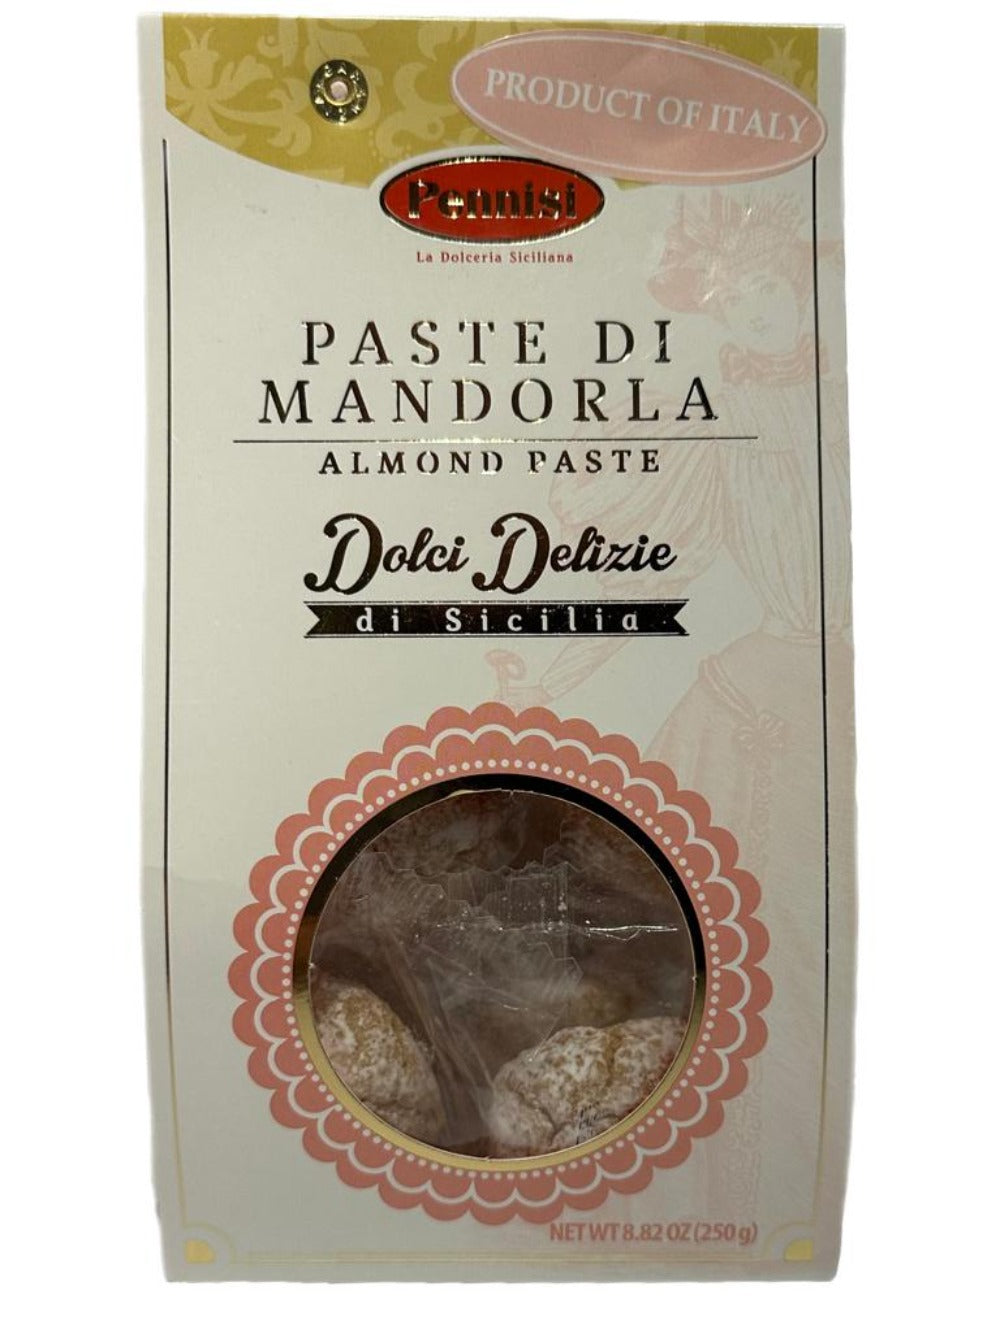 Pennisi Paste di Mandorla Almond Paste Biscuits 250g